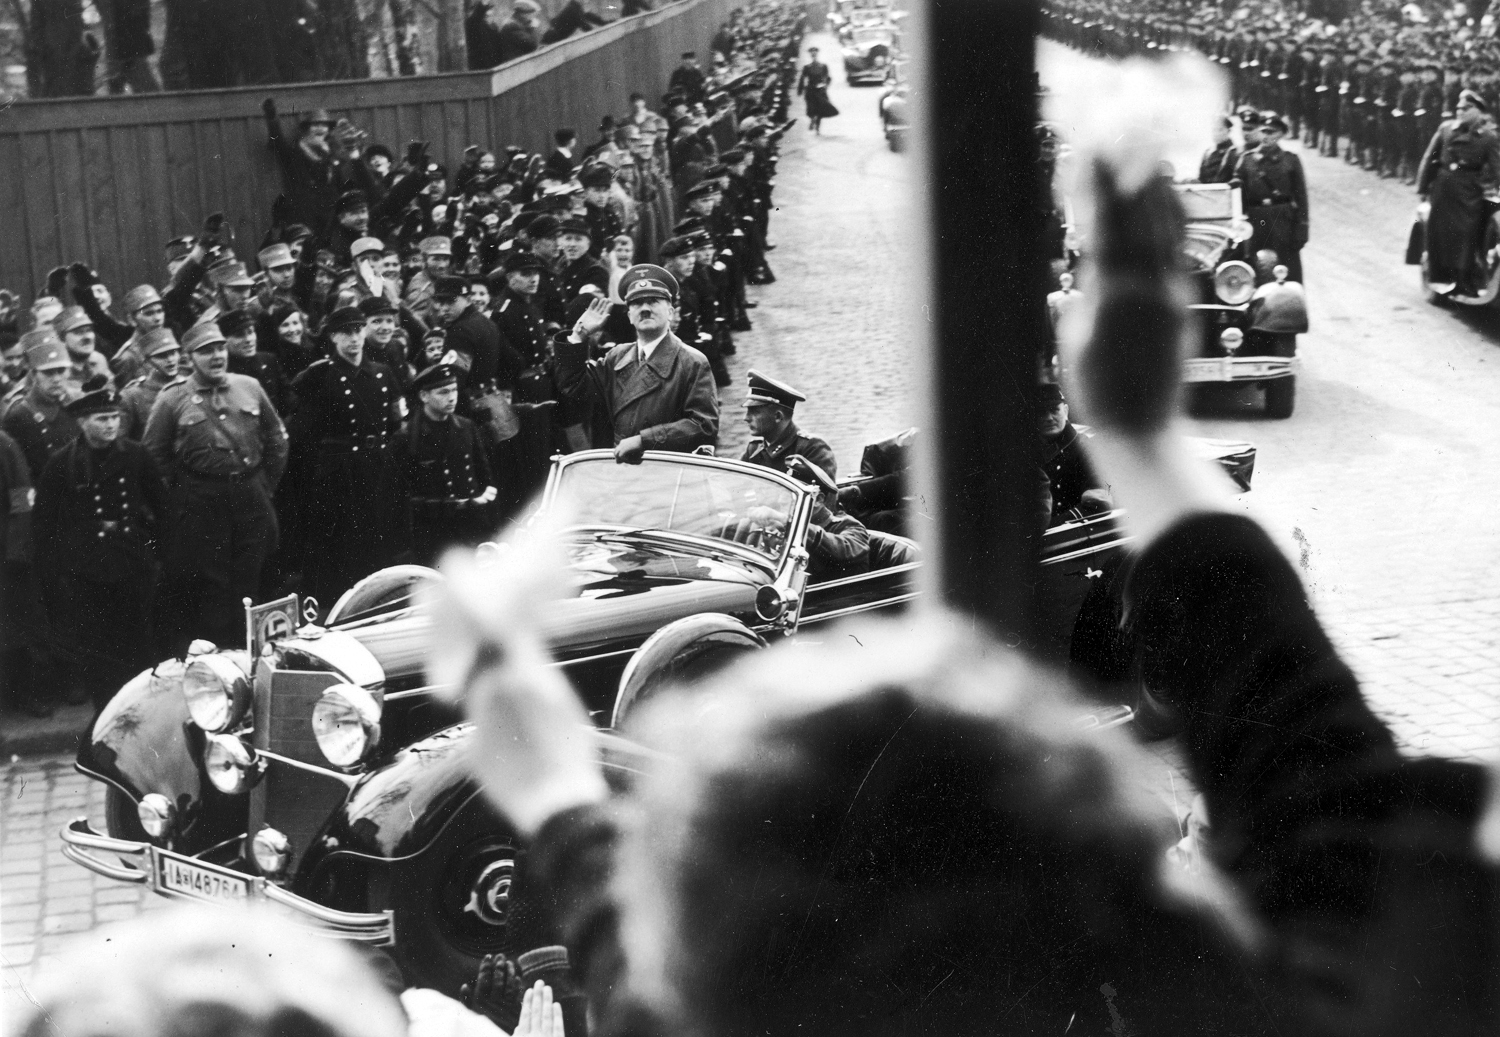 Citizens of Klaipeda welcome Adolf Hitler as he crosses the city of Memel